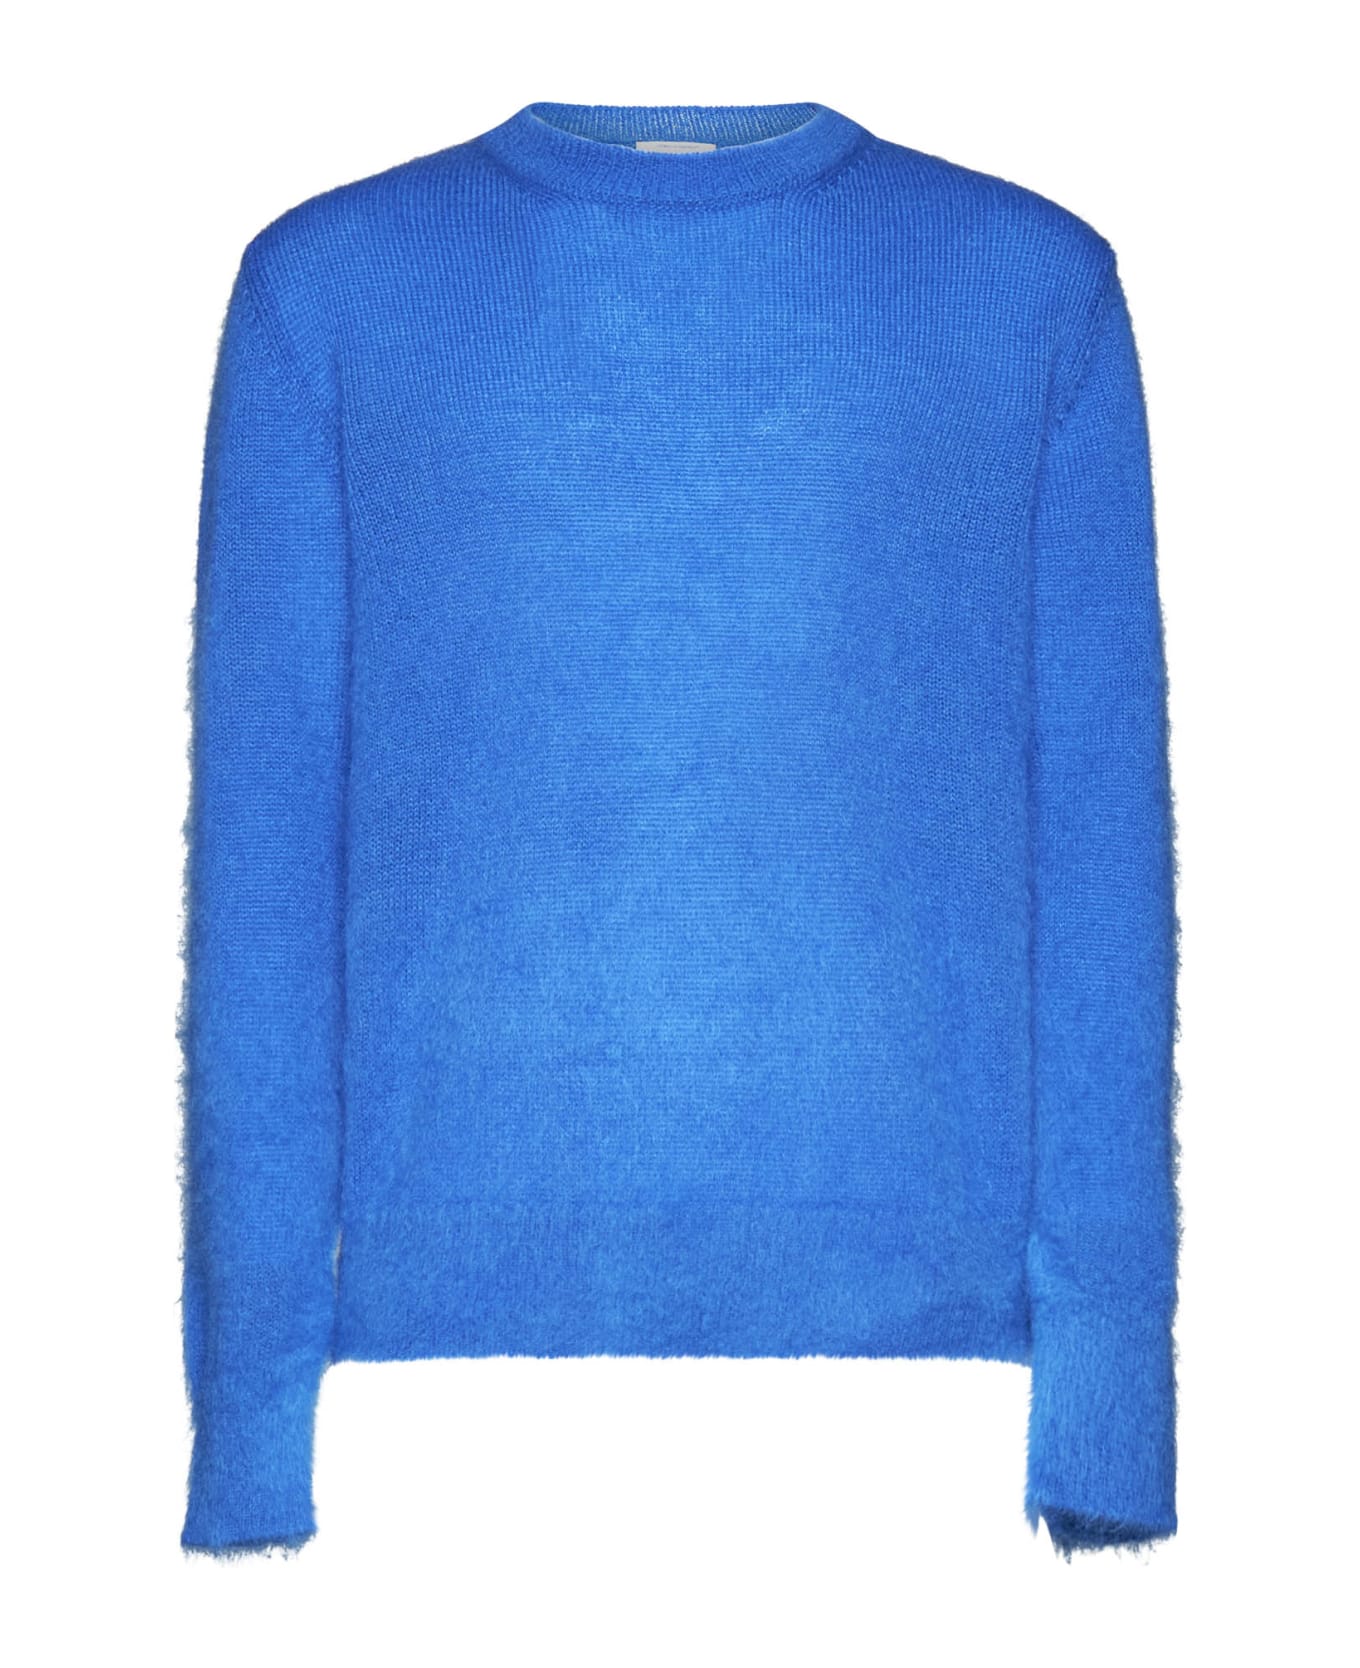 Off-White Mohair Knit Sweater - Dark blue